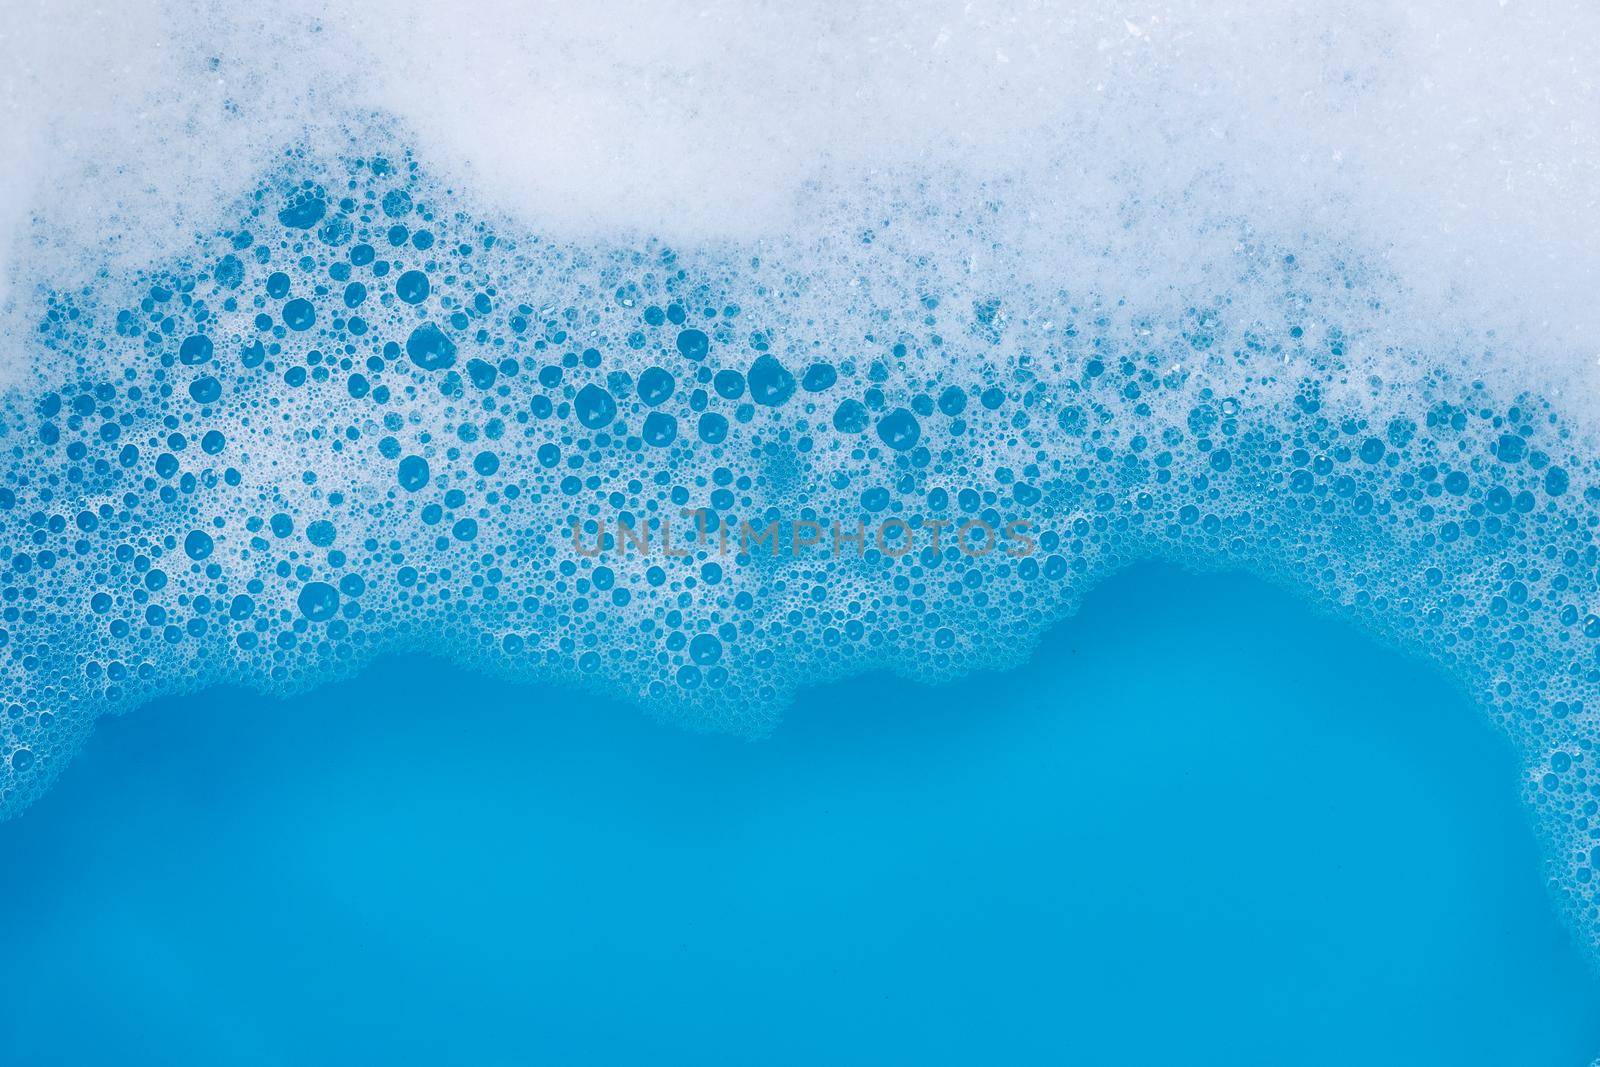 Detergent foam bubble on blue background. Top view